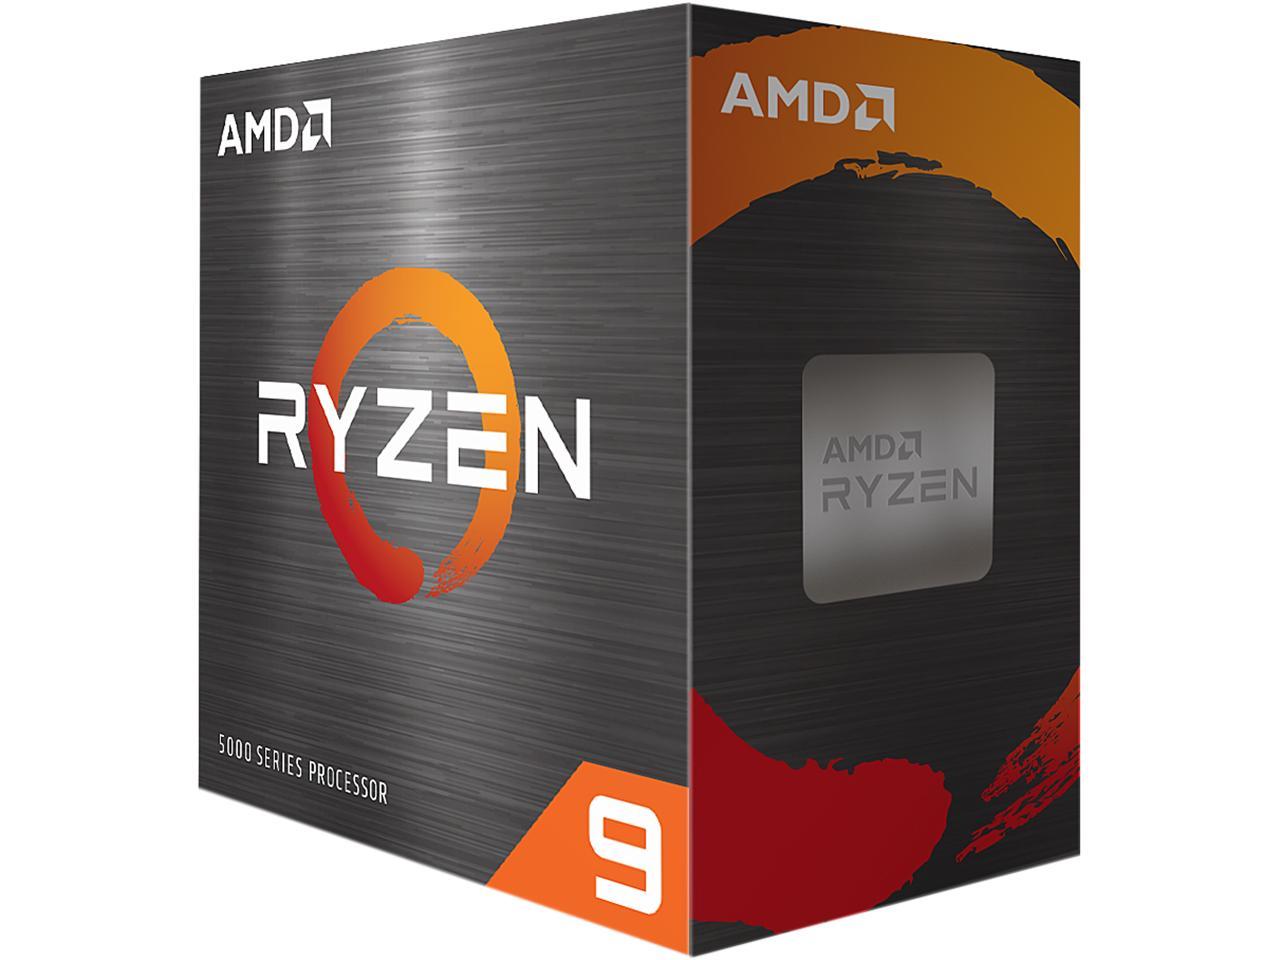 AMD Ryzen 9 5900X AM4 105W Desktop Processor CPU $314 + Free Shipping